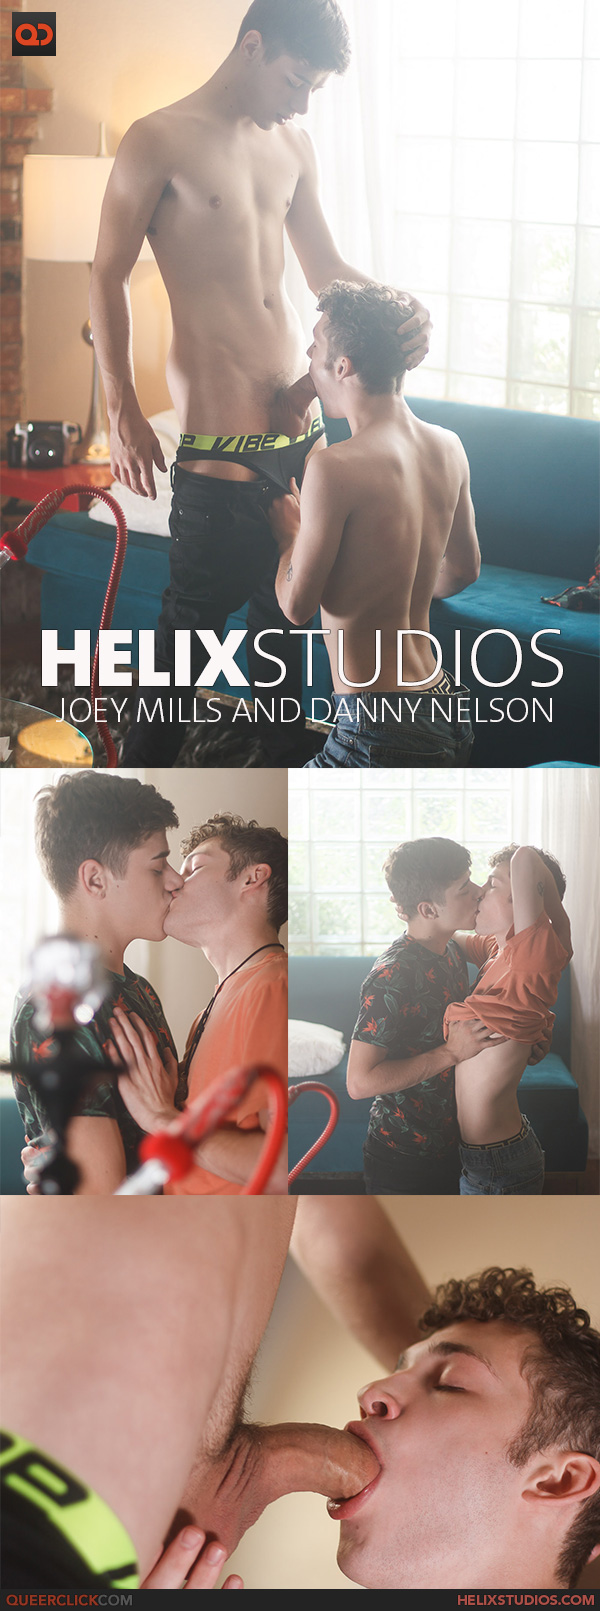 Helix Studios: Joey Mills and Danny Nelson